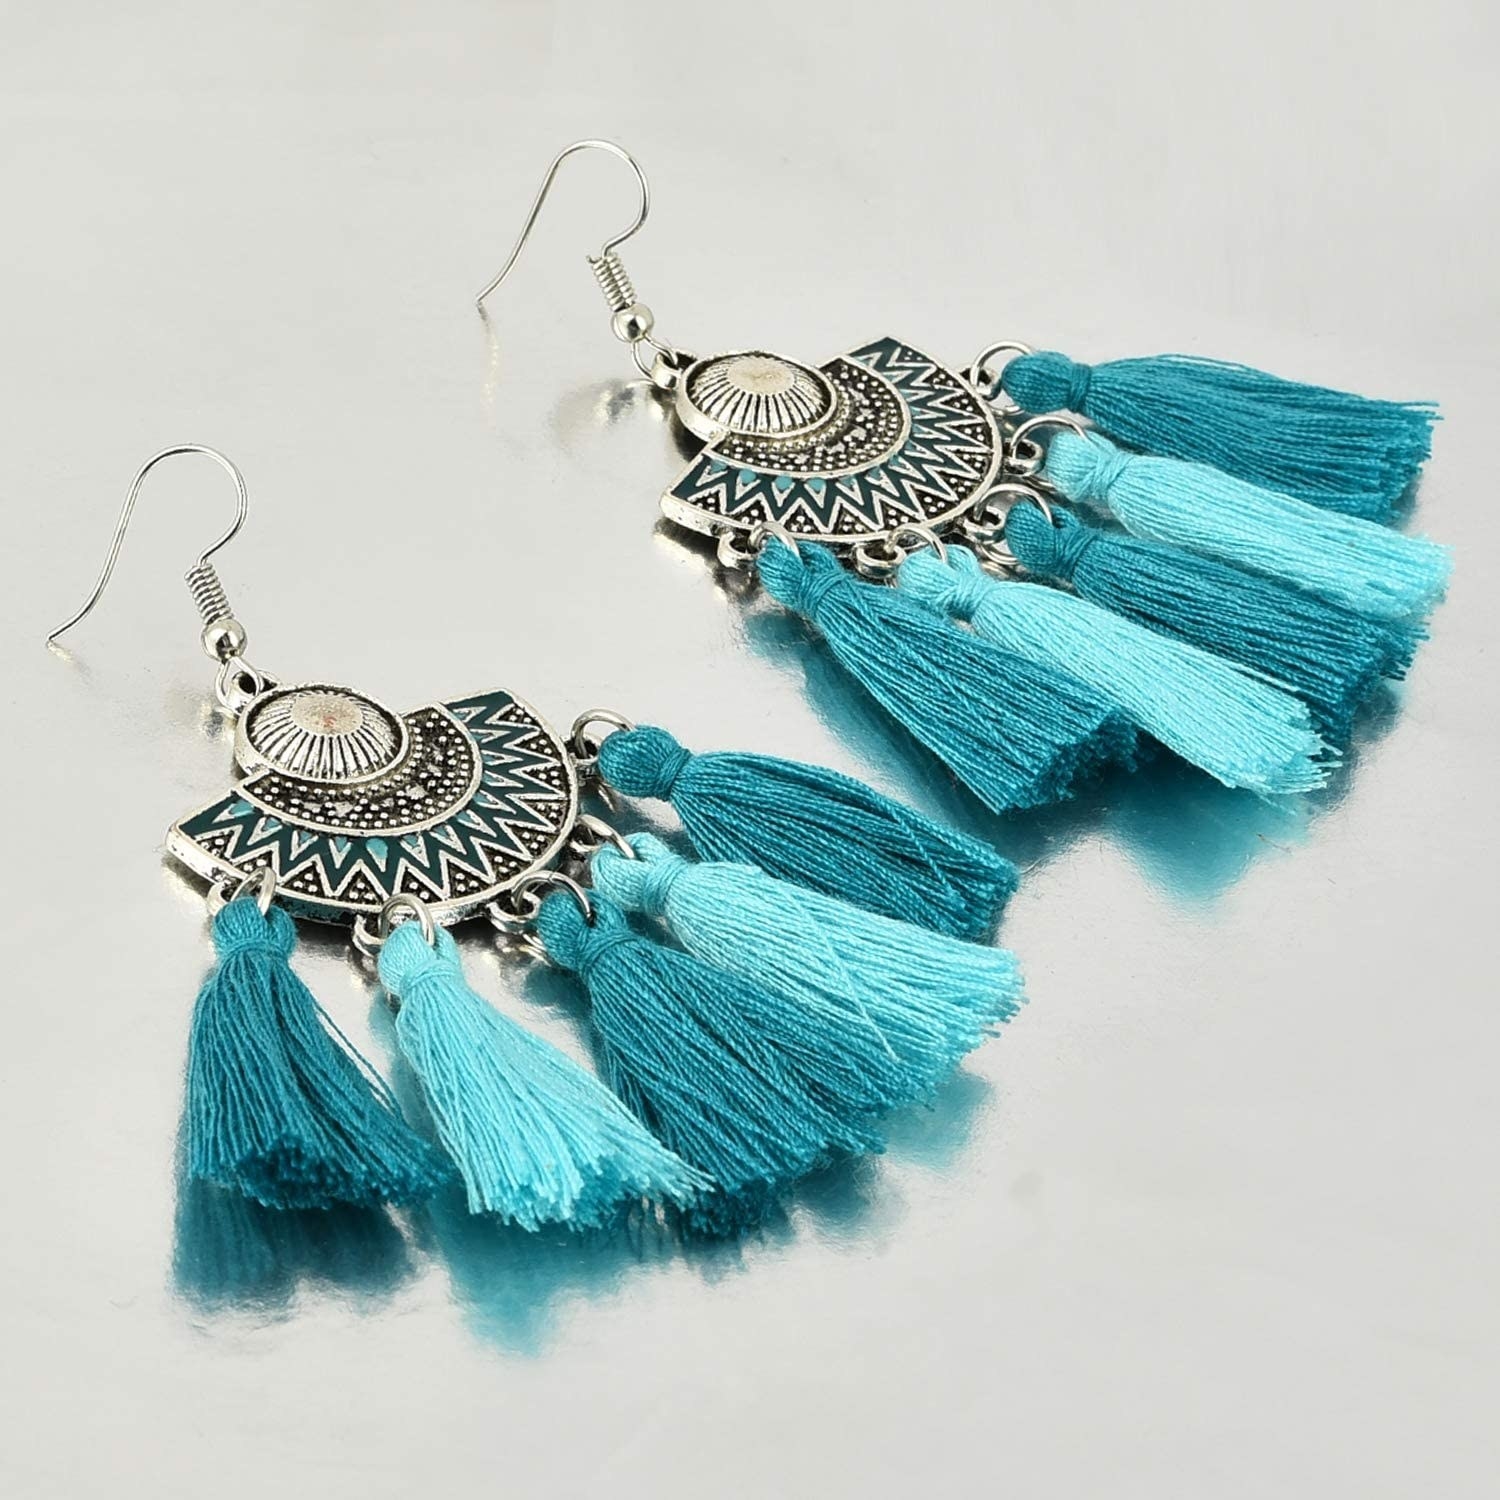 A pair of tasseled earrings in varying shades of blue